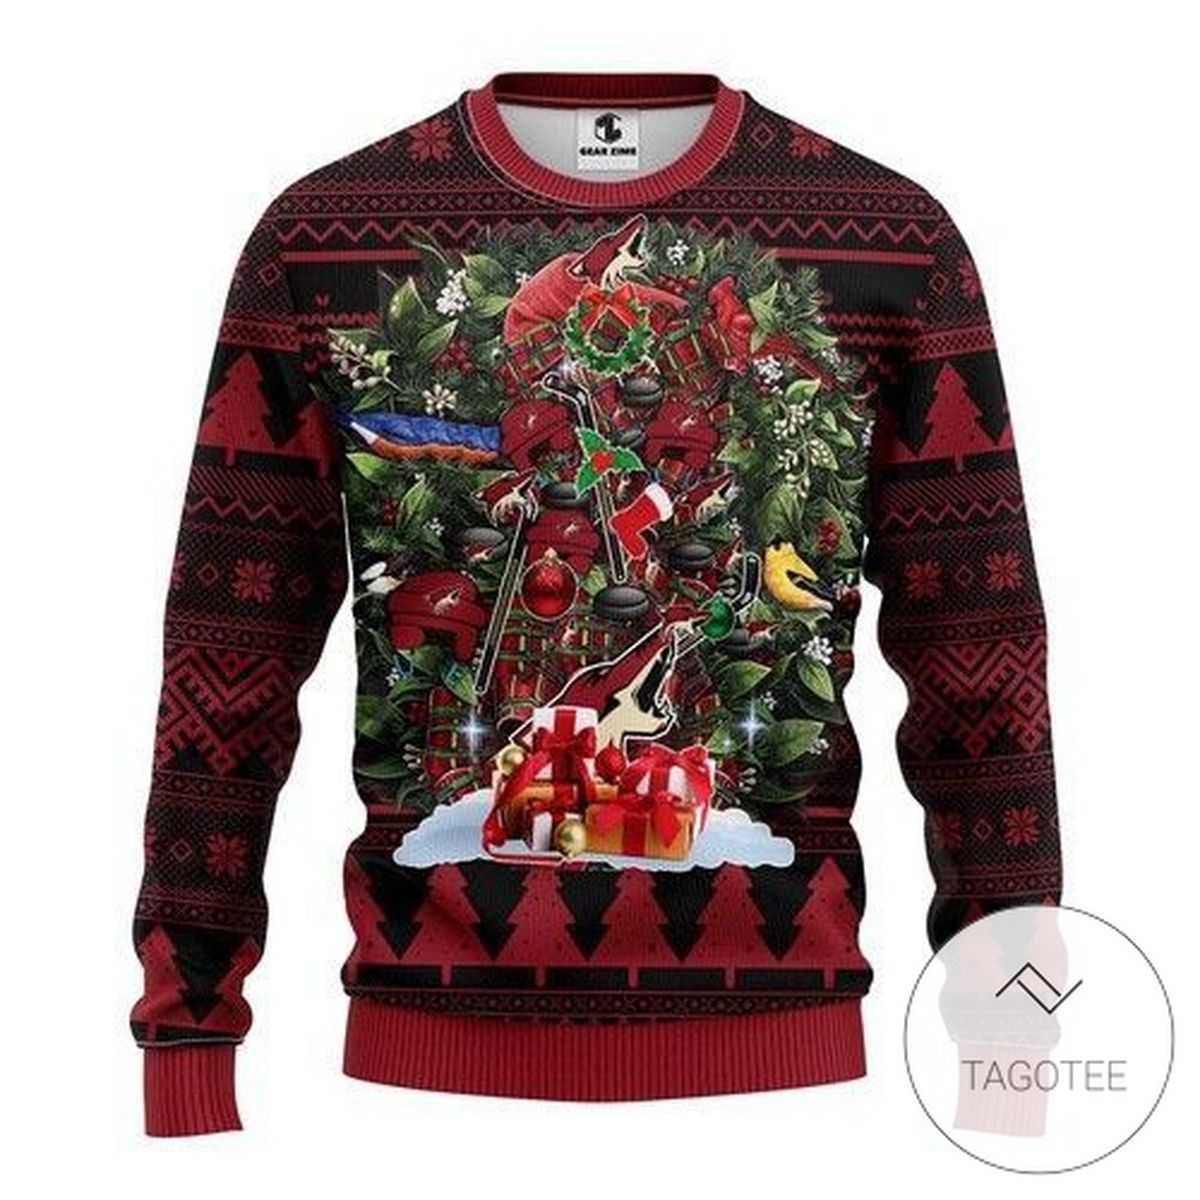 Nhl Phoenix Coyotes Sweatshirt Knitted Ugly Christmas Sweater